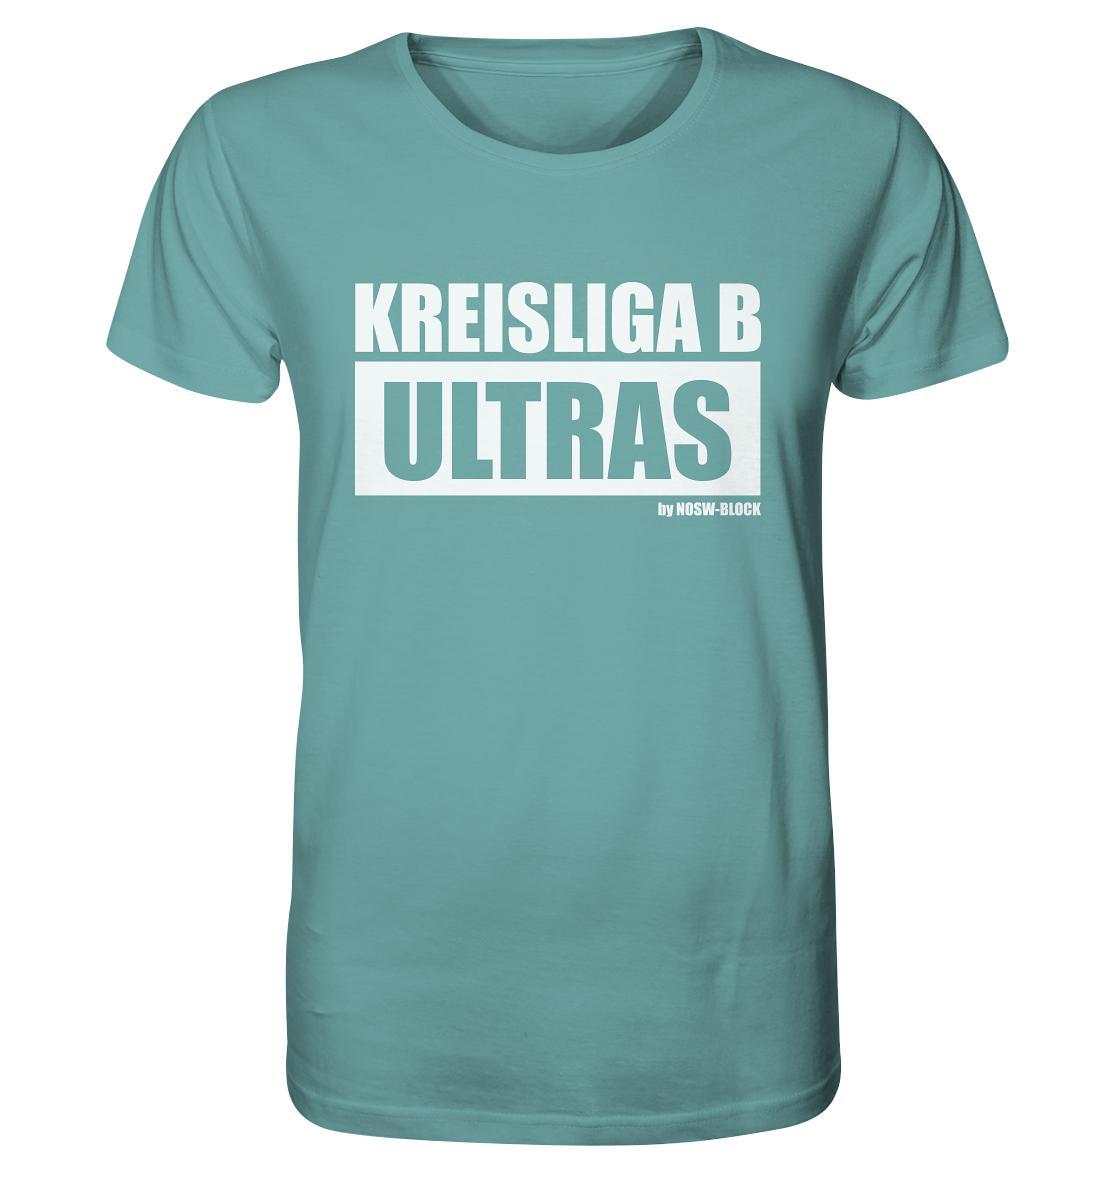 N.O.S.W. BLOCK Ultras Shirt "KREISLIGA B ULTRAS" Männer Organic T-Shirt citadel blue